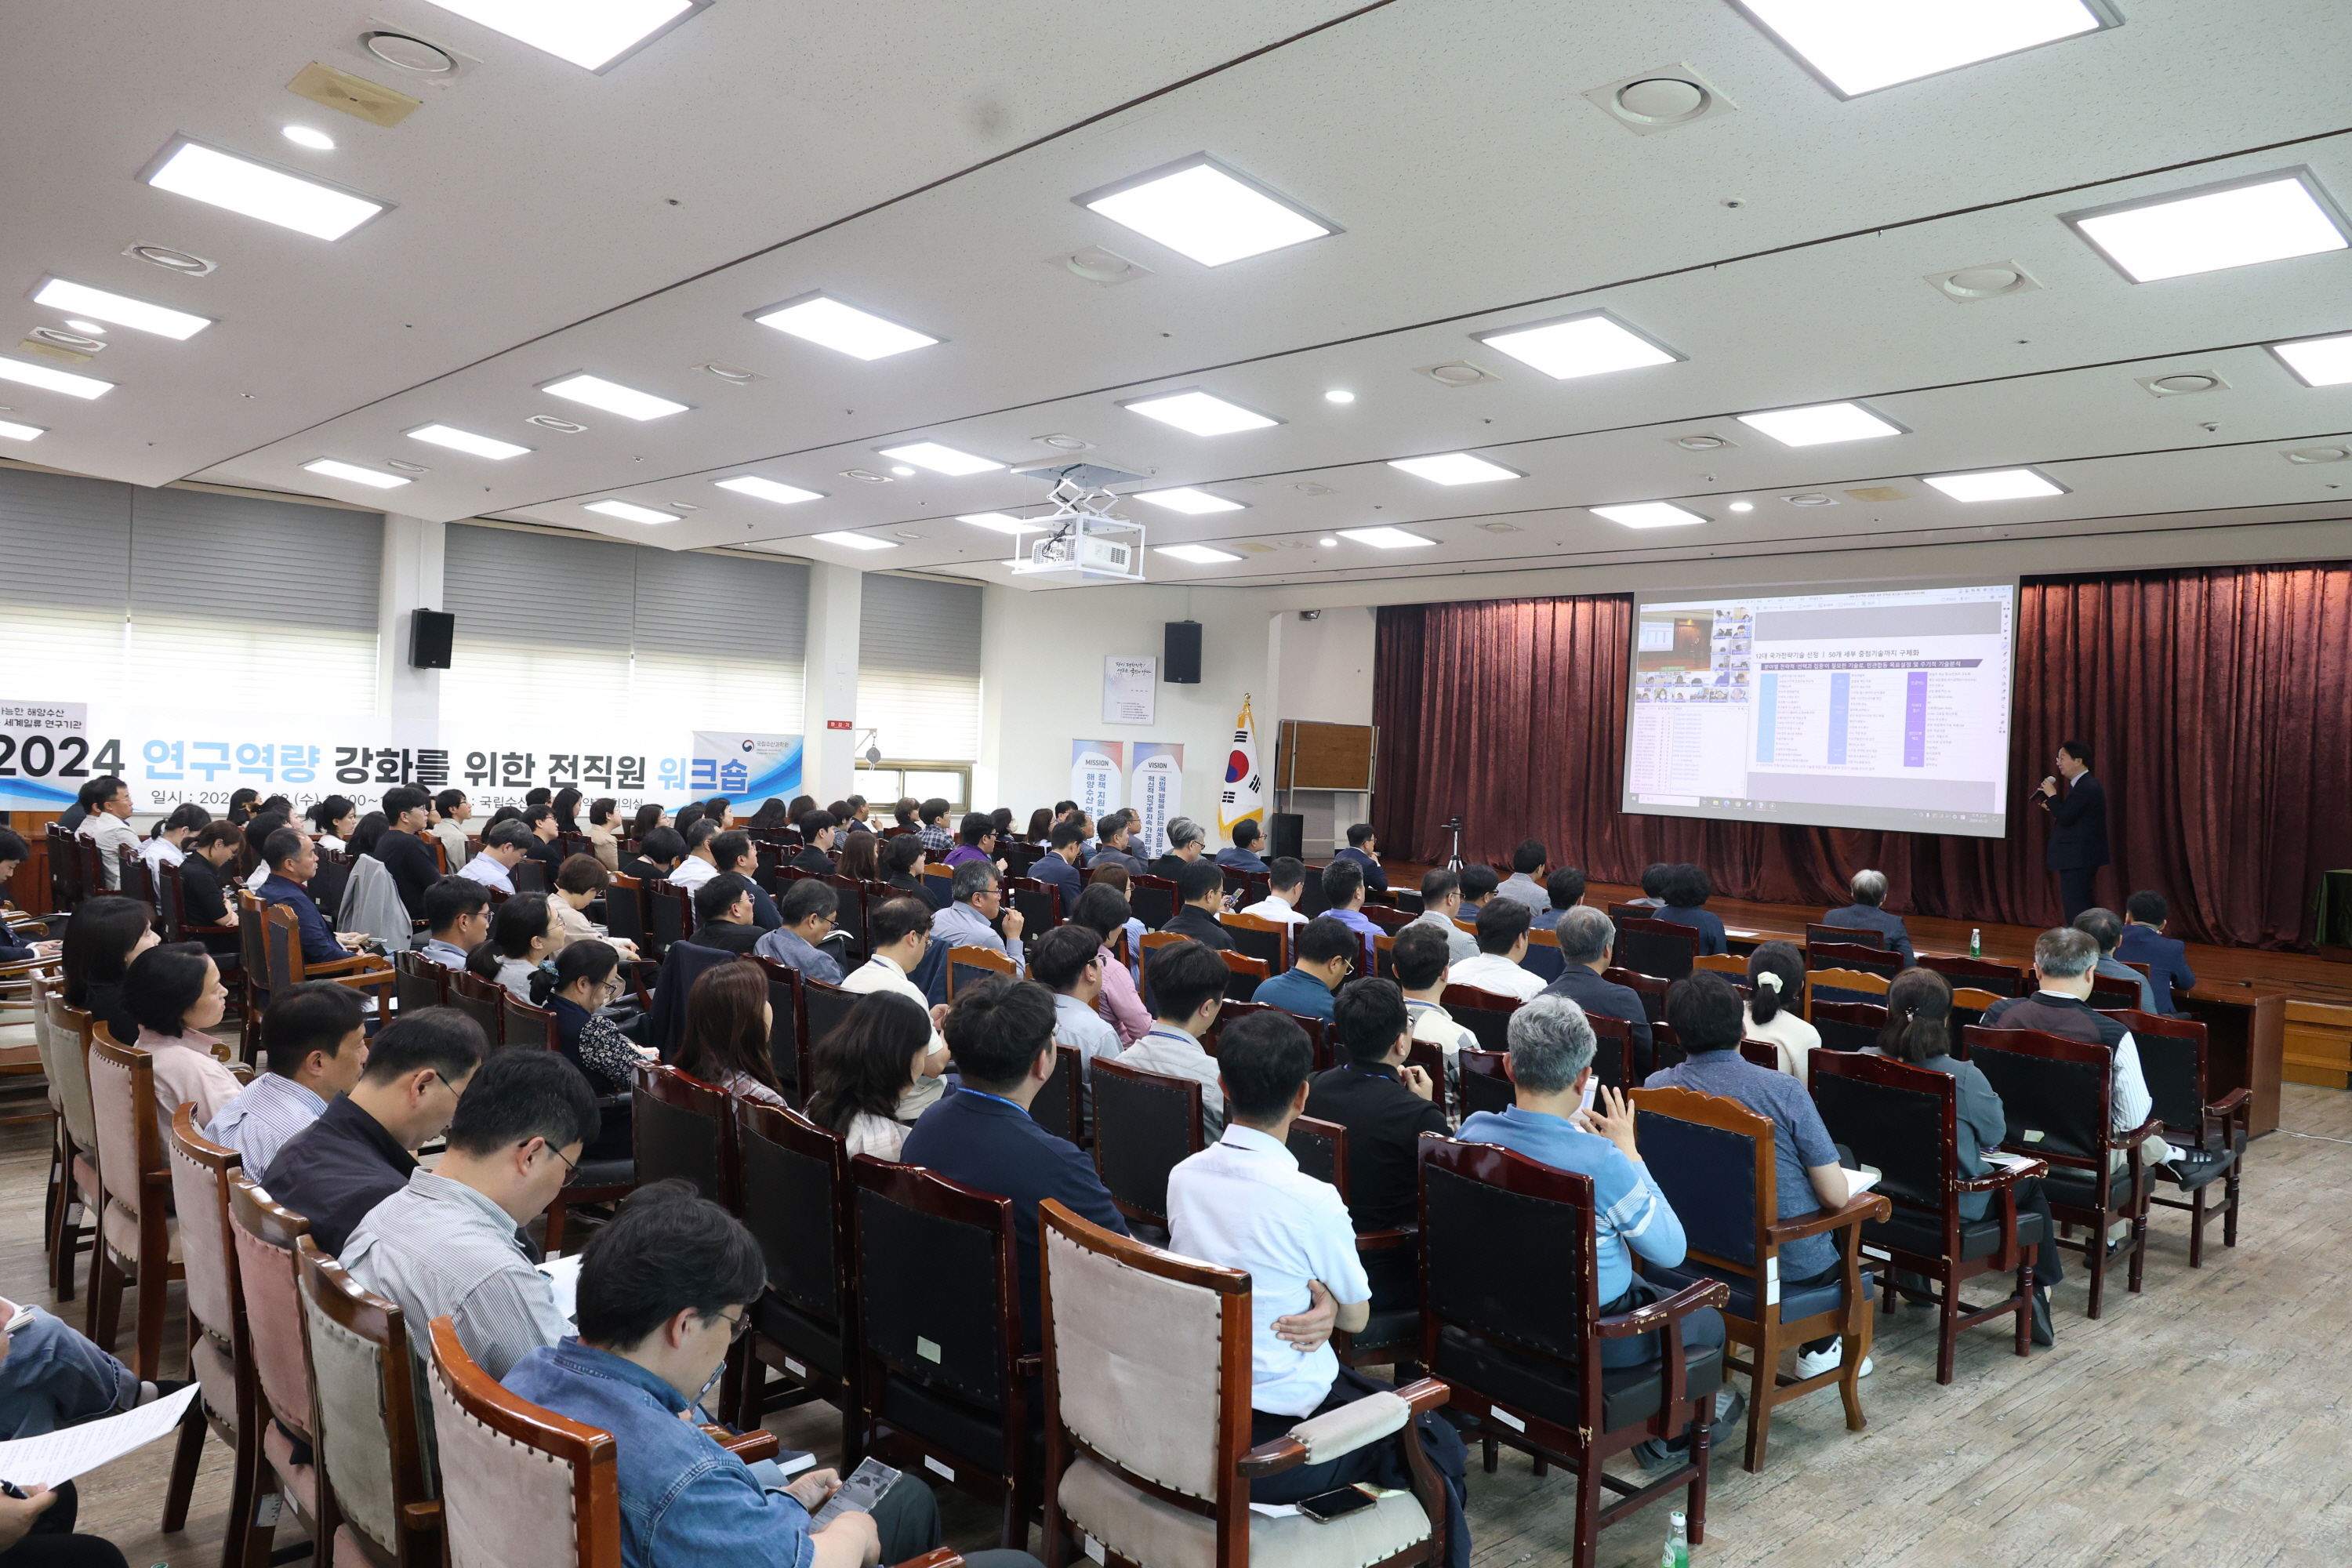 2024 NIFS Workshop for Capacity Building of All Members 배경